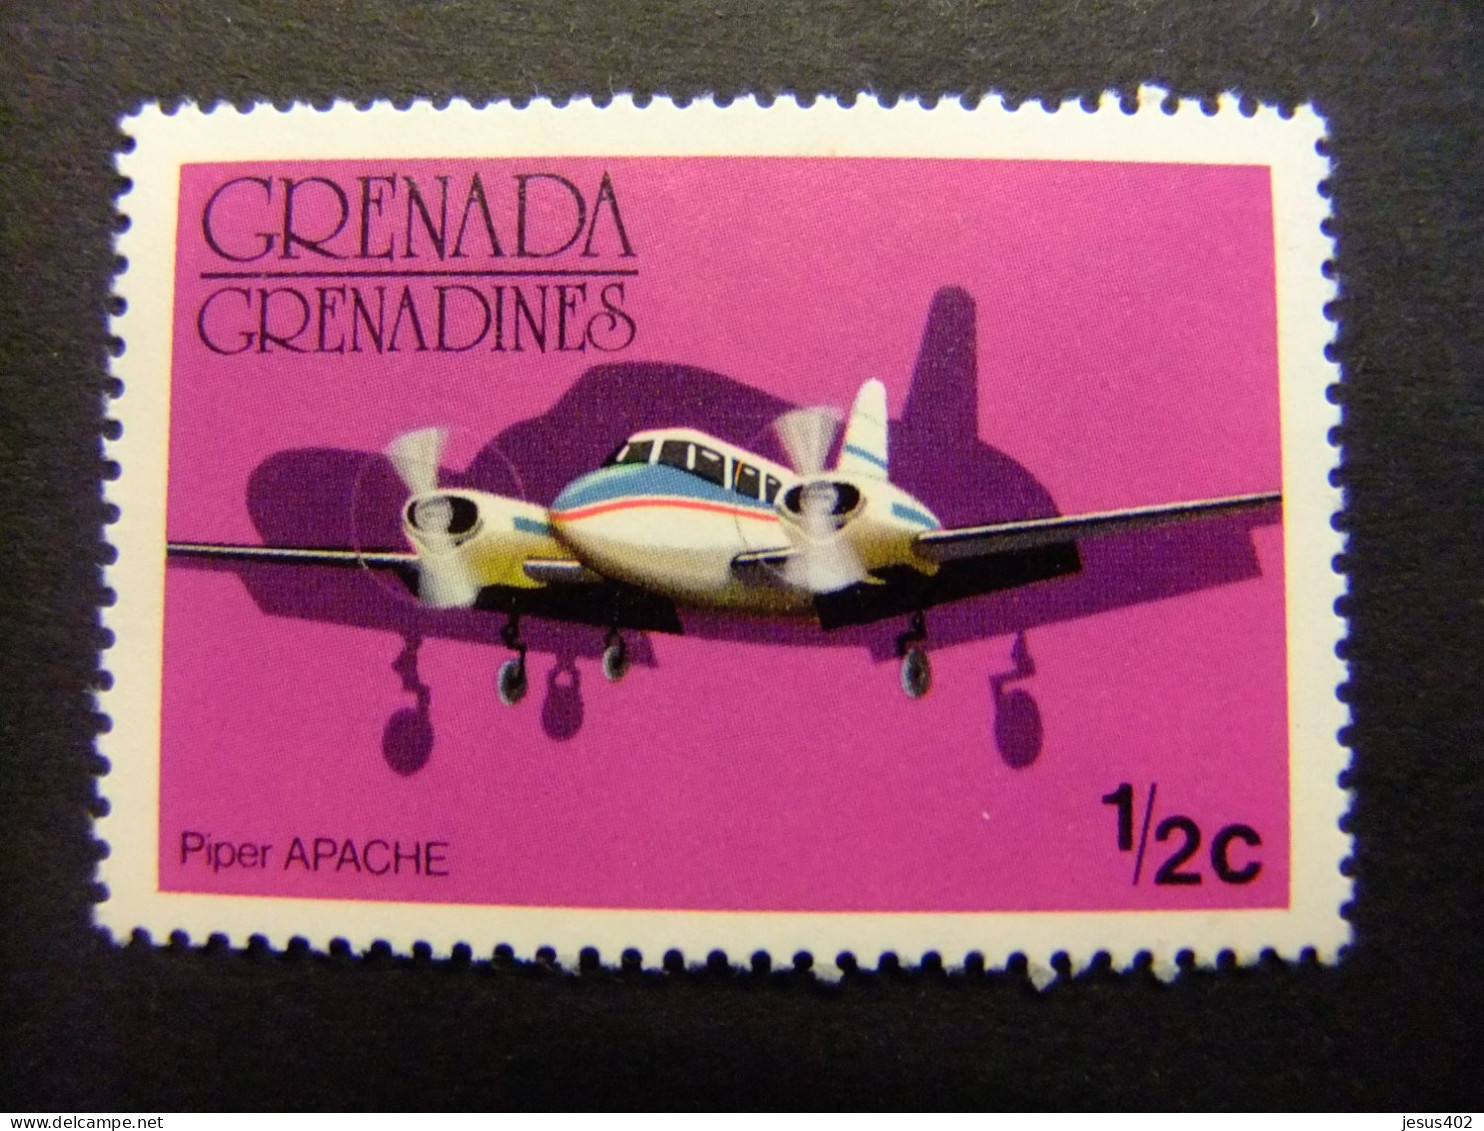 41 GRENADA GRENADINES 1976 / AVIÓN PIPER " APACHE " / YVERT 164 MNH - Grenada (1974-...)